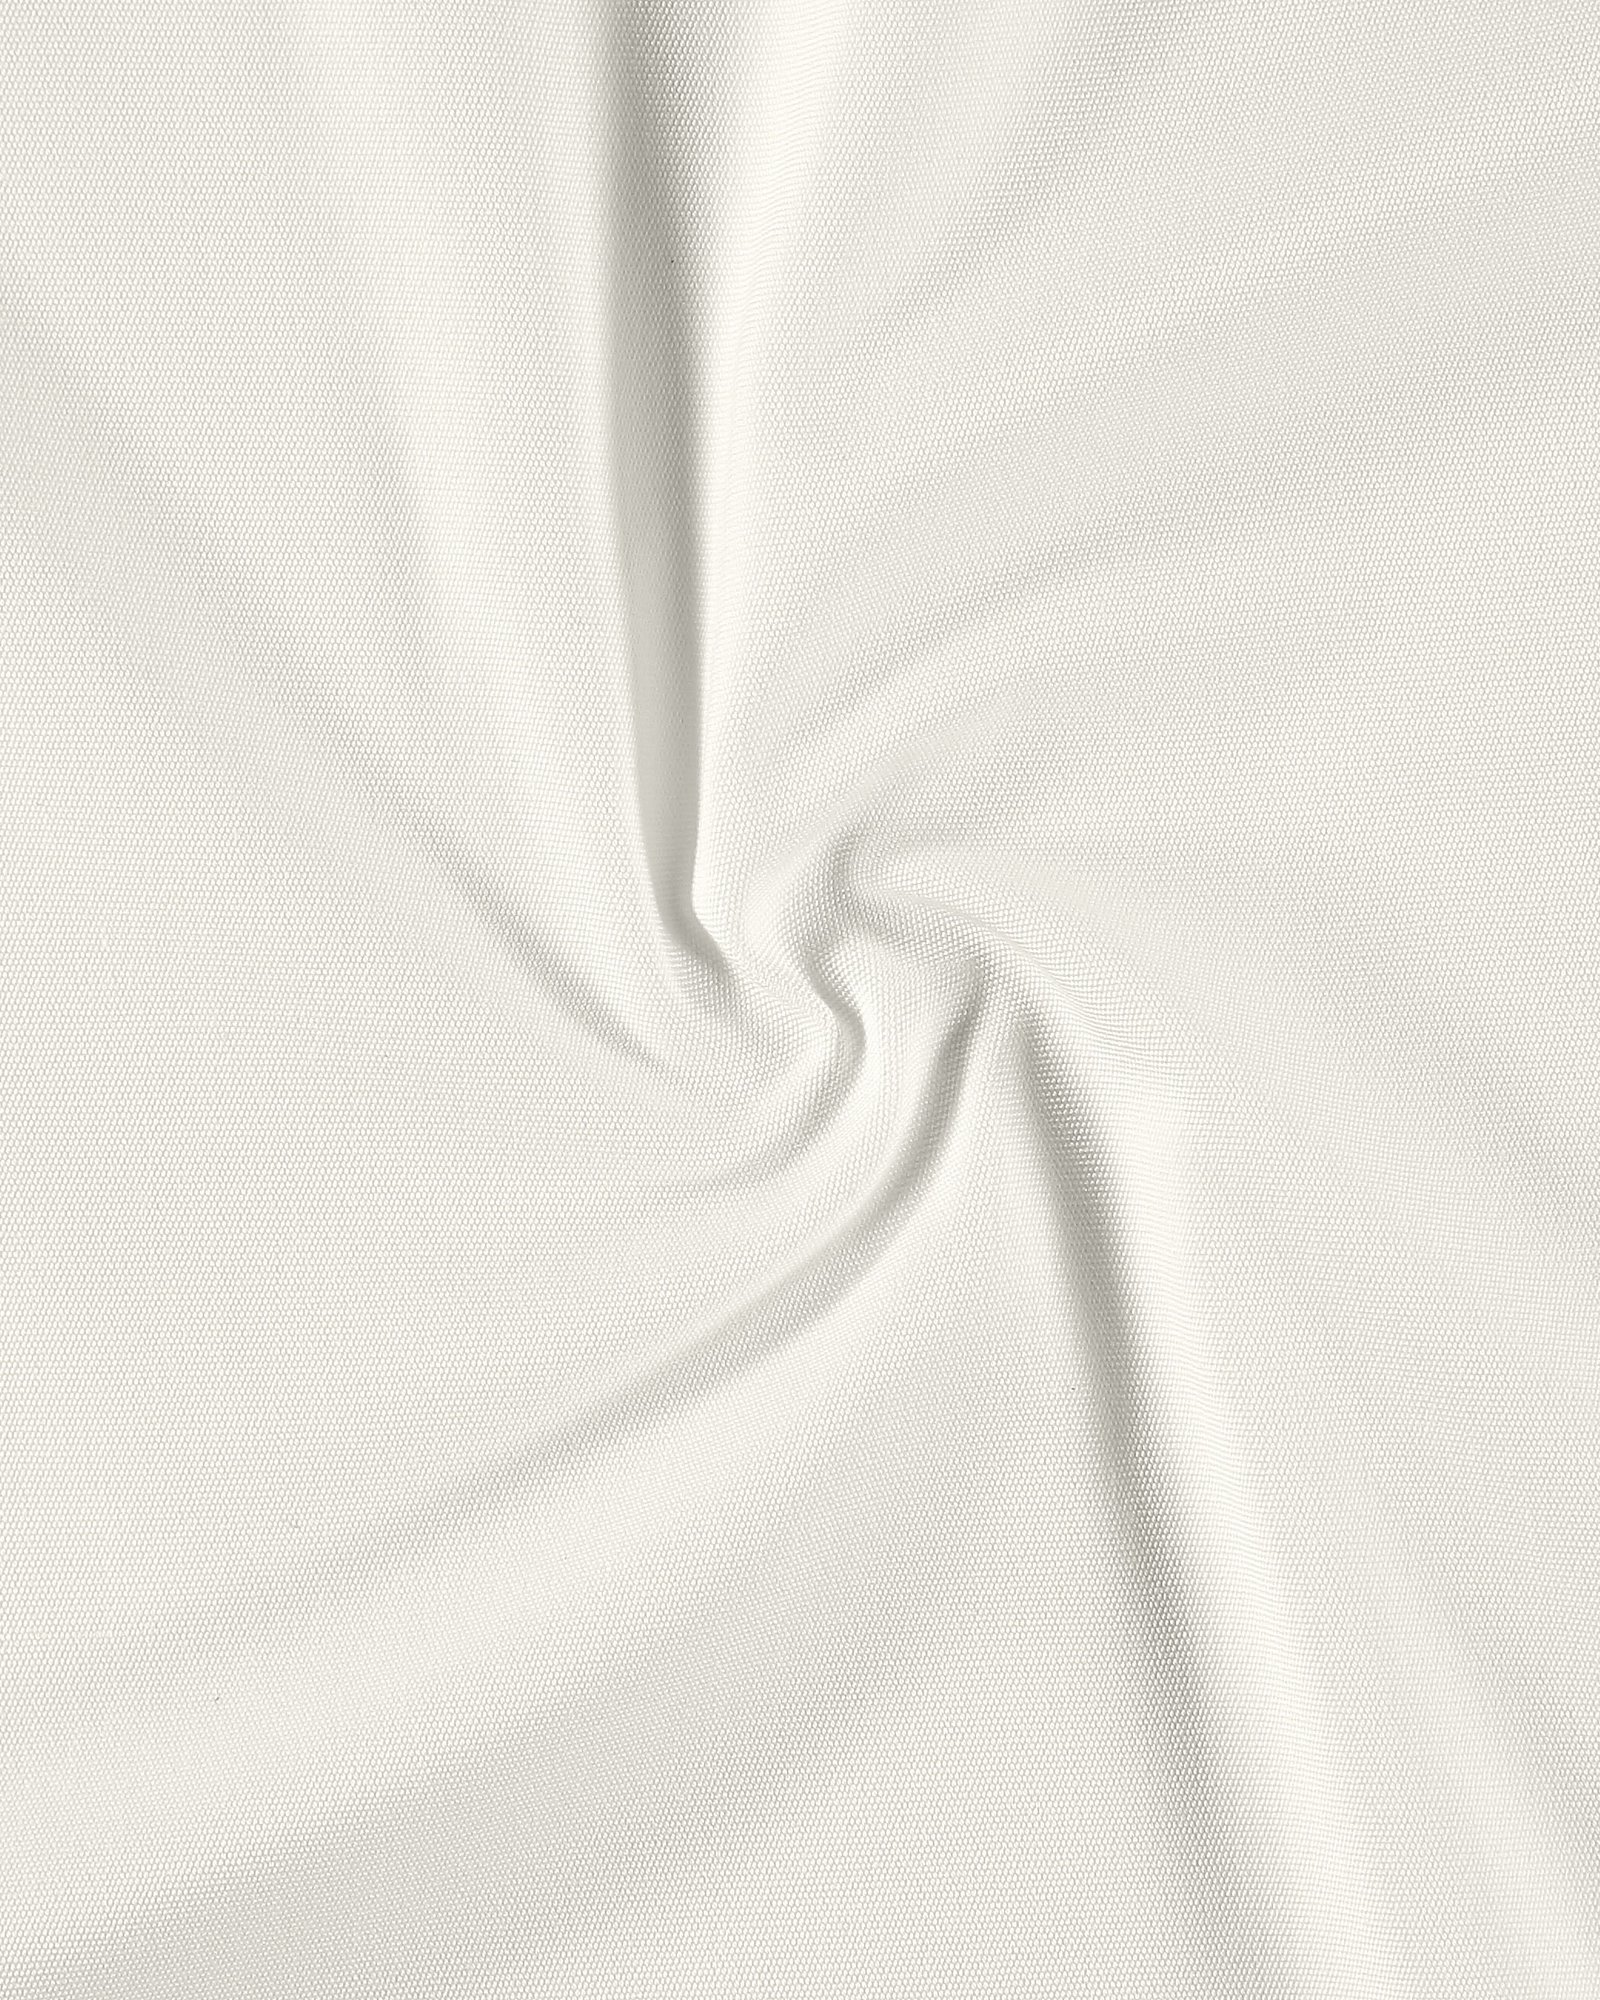 ALBEROSUN® outdoor fabric white 826249_pack